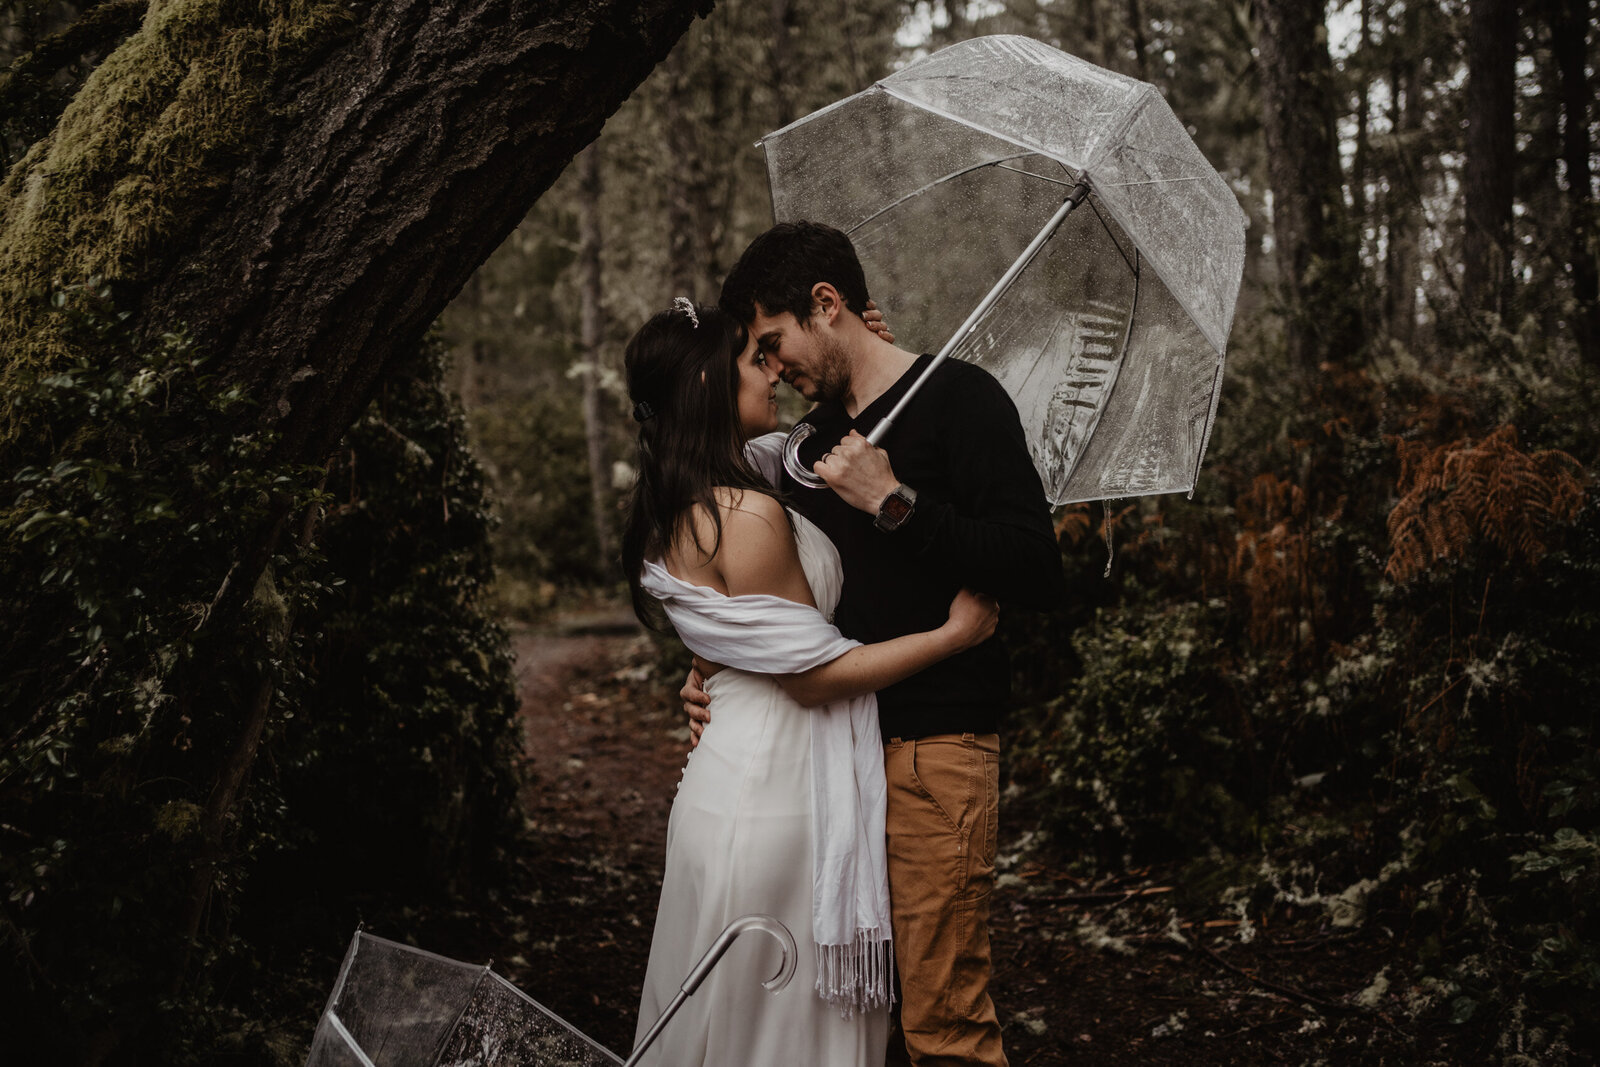 Couple holding umbrella in the rain